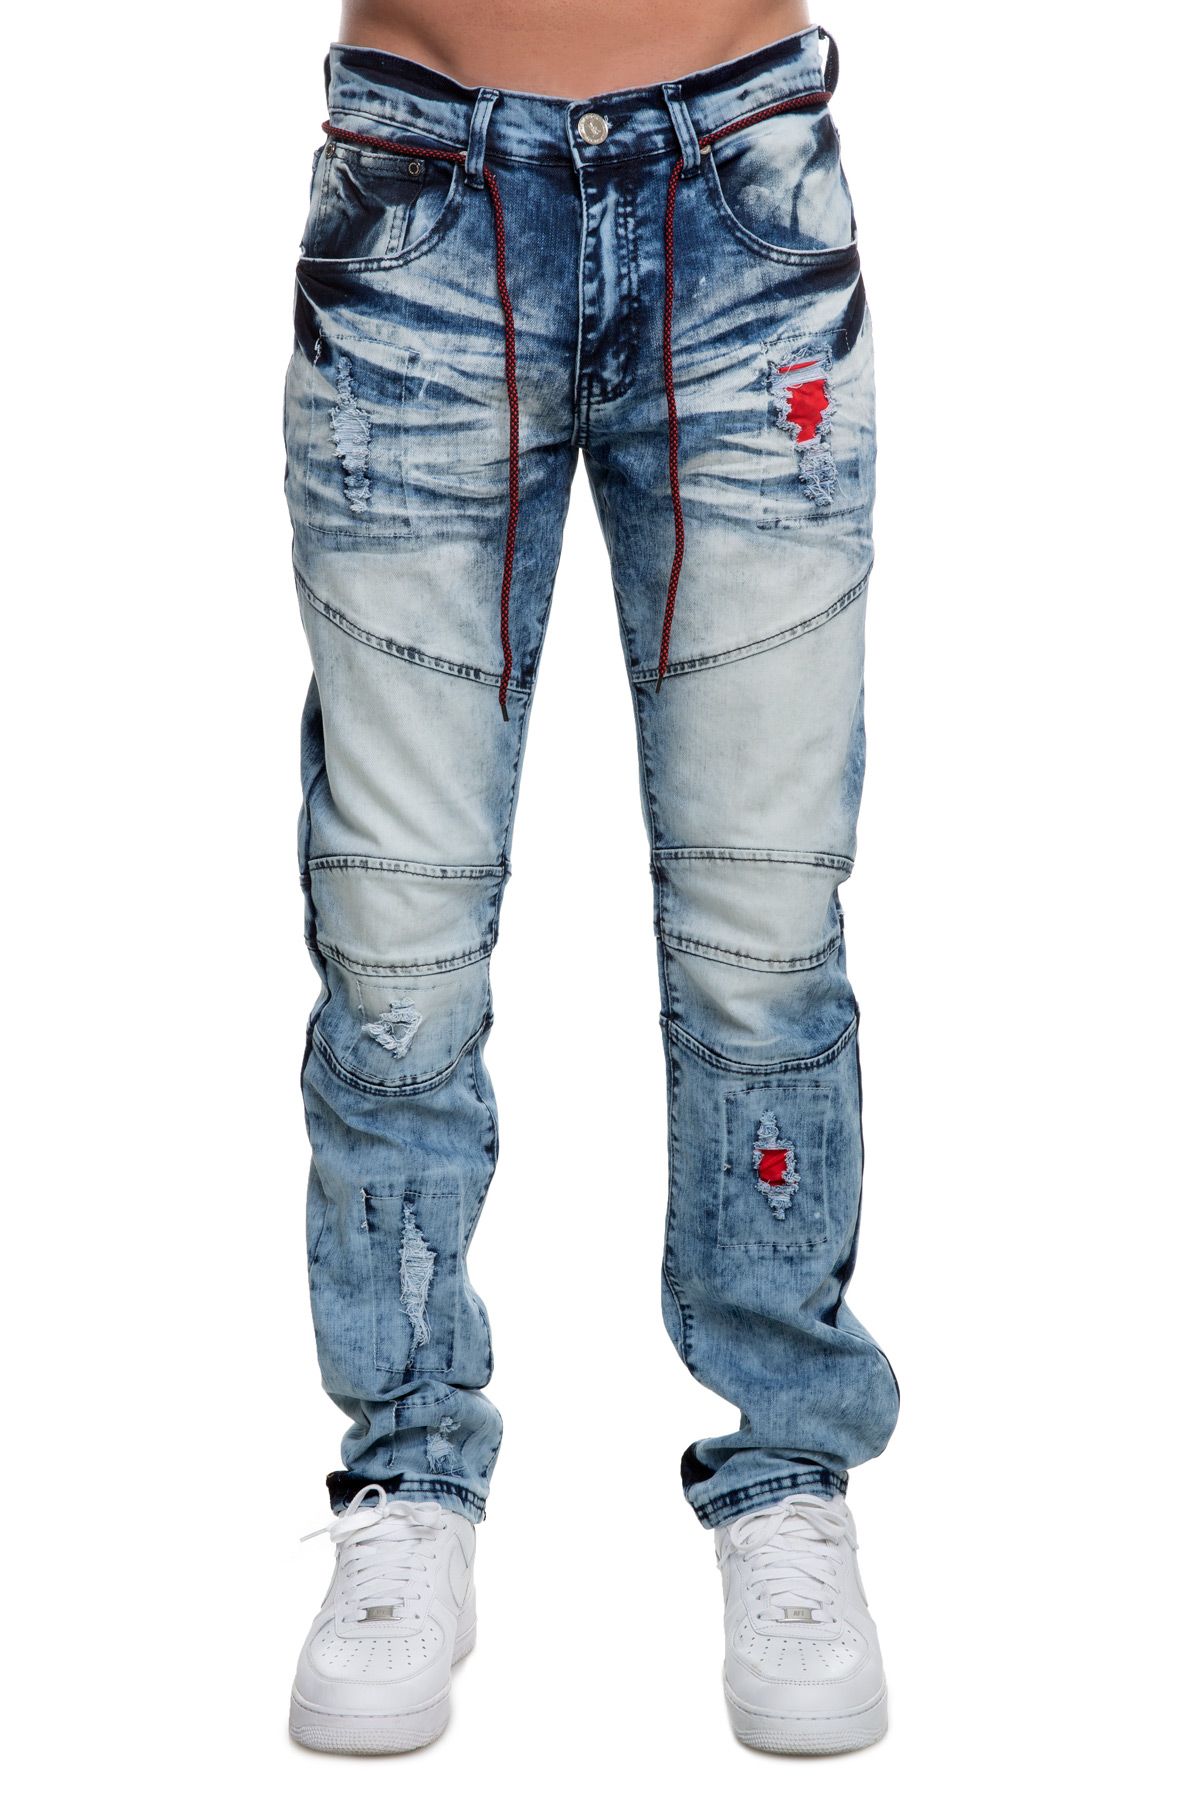 denim moto jeans